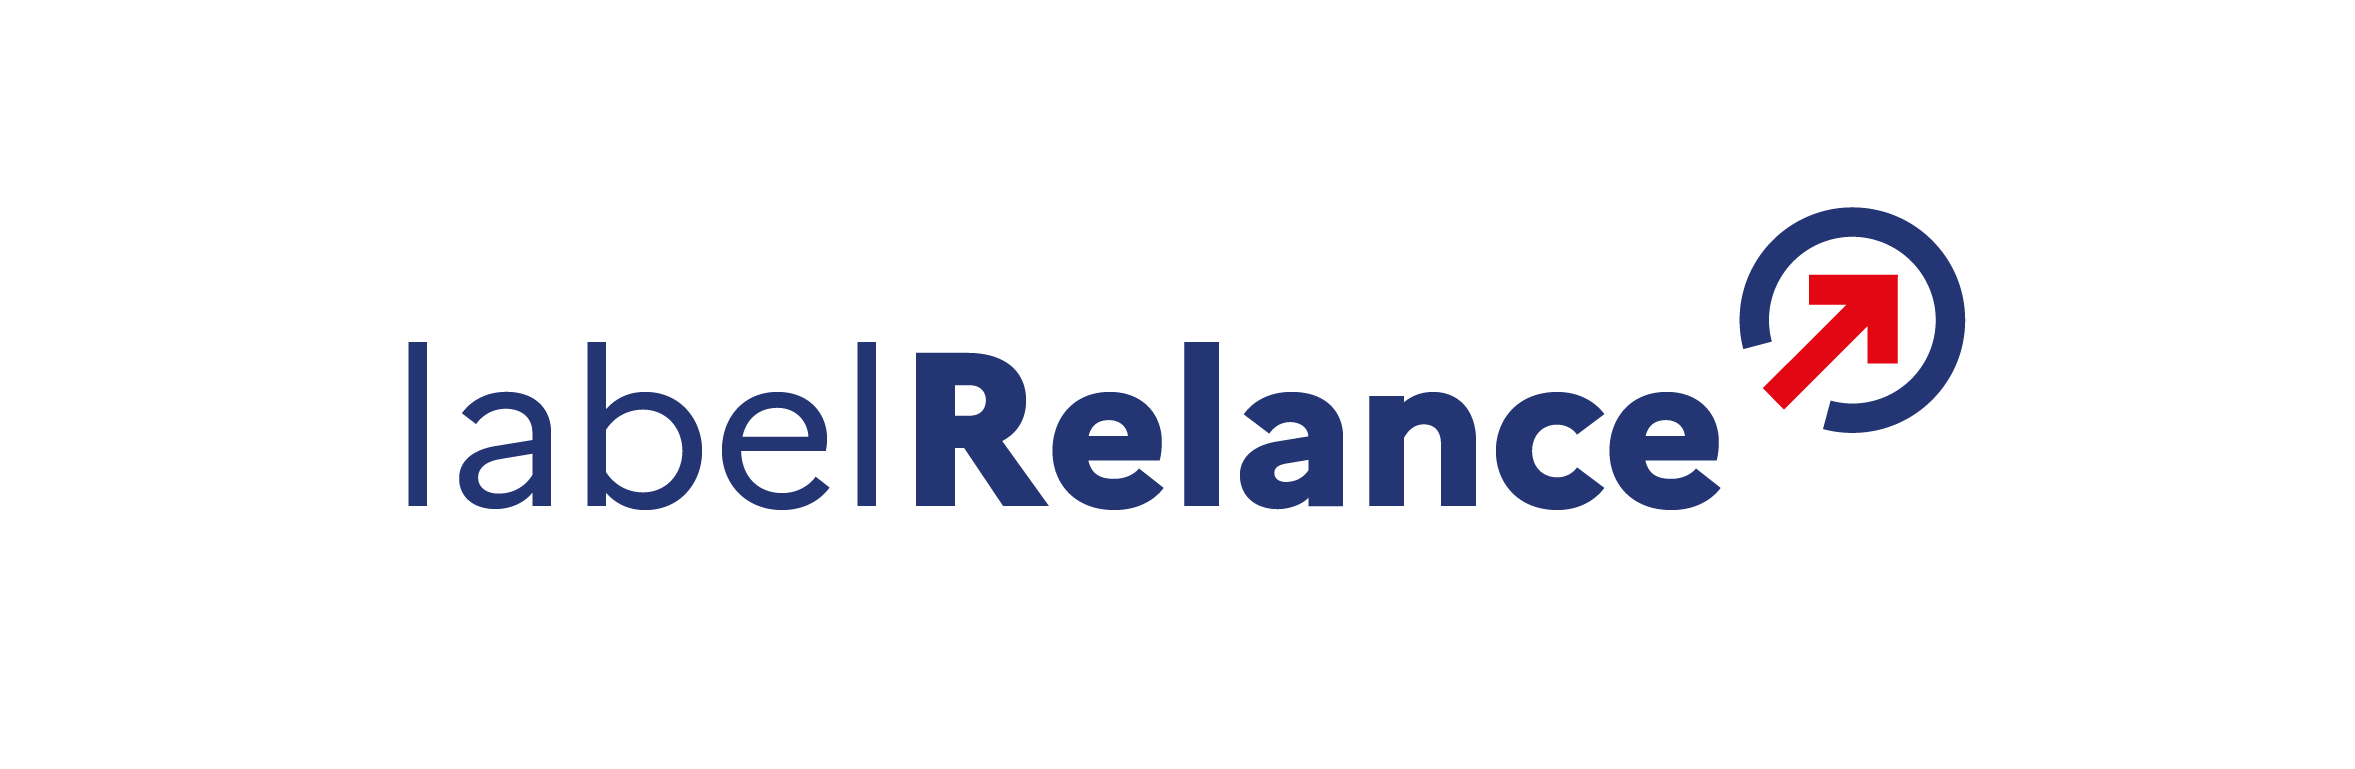 label "Relance" 2020